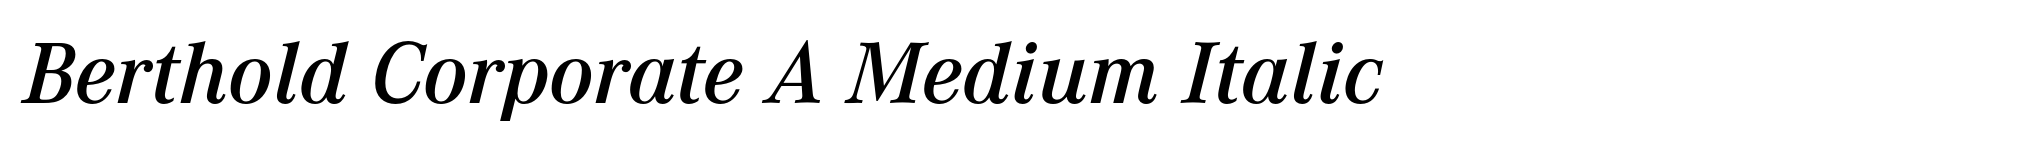 Berthold Corporate A Medium Italic image